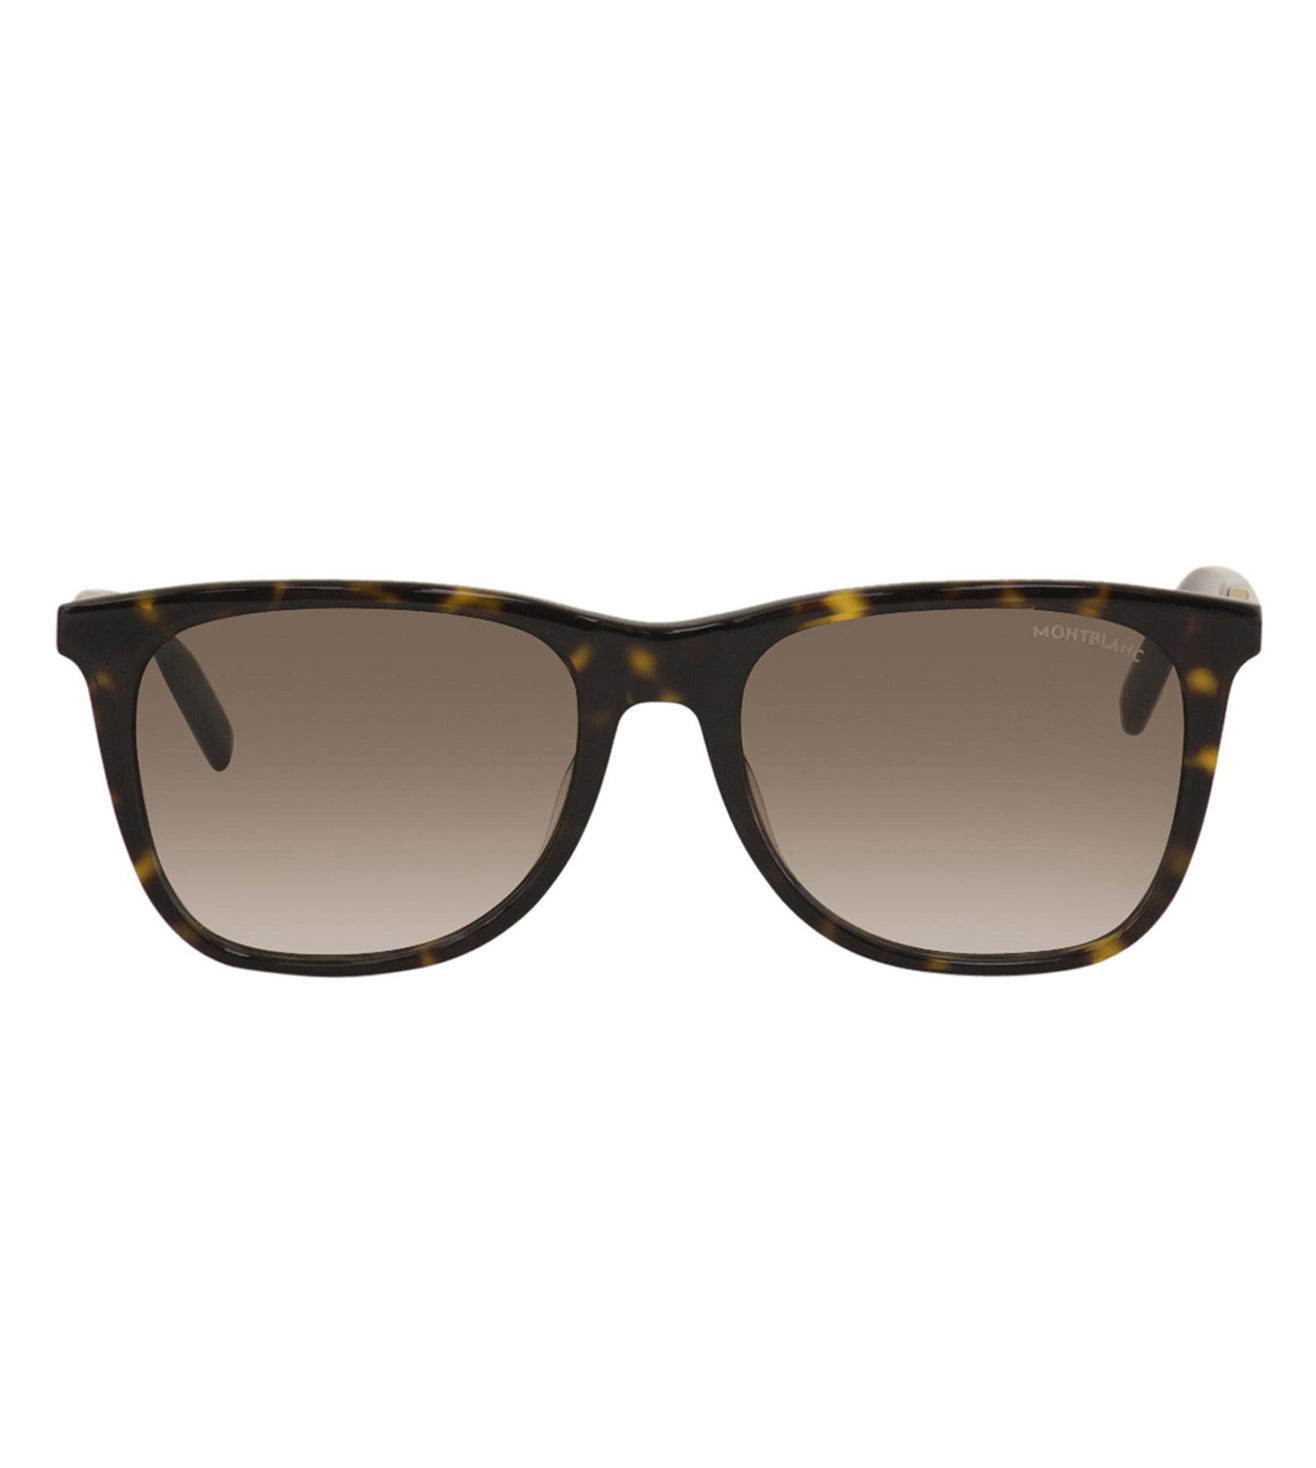 Montblanc Men's Brown Wayfarer Sunglasses